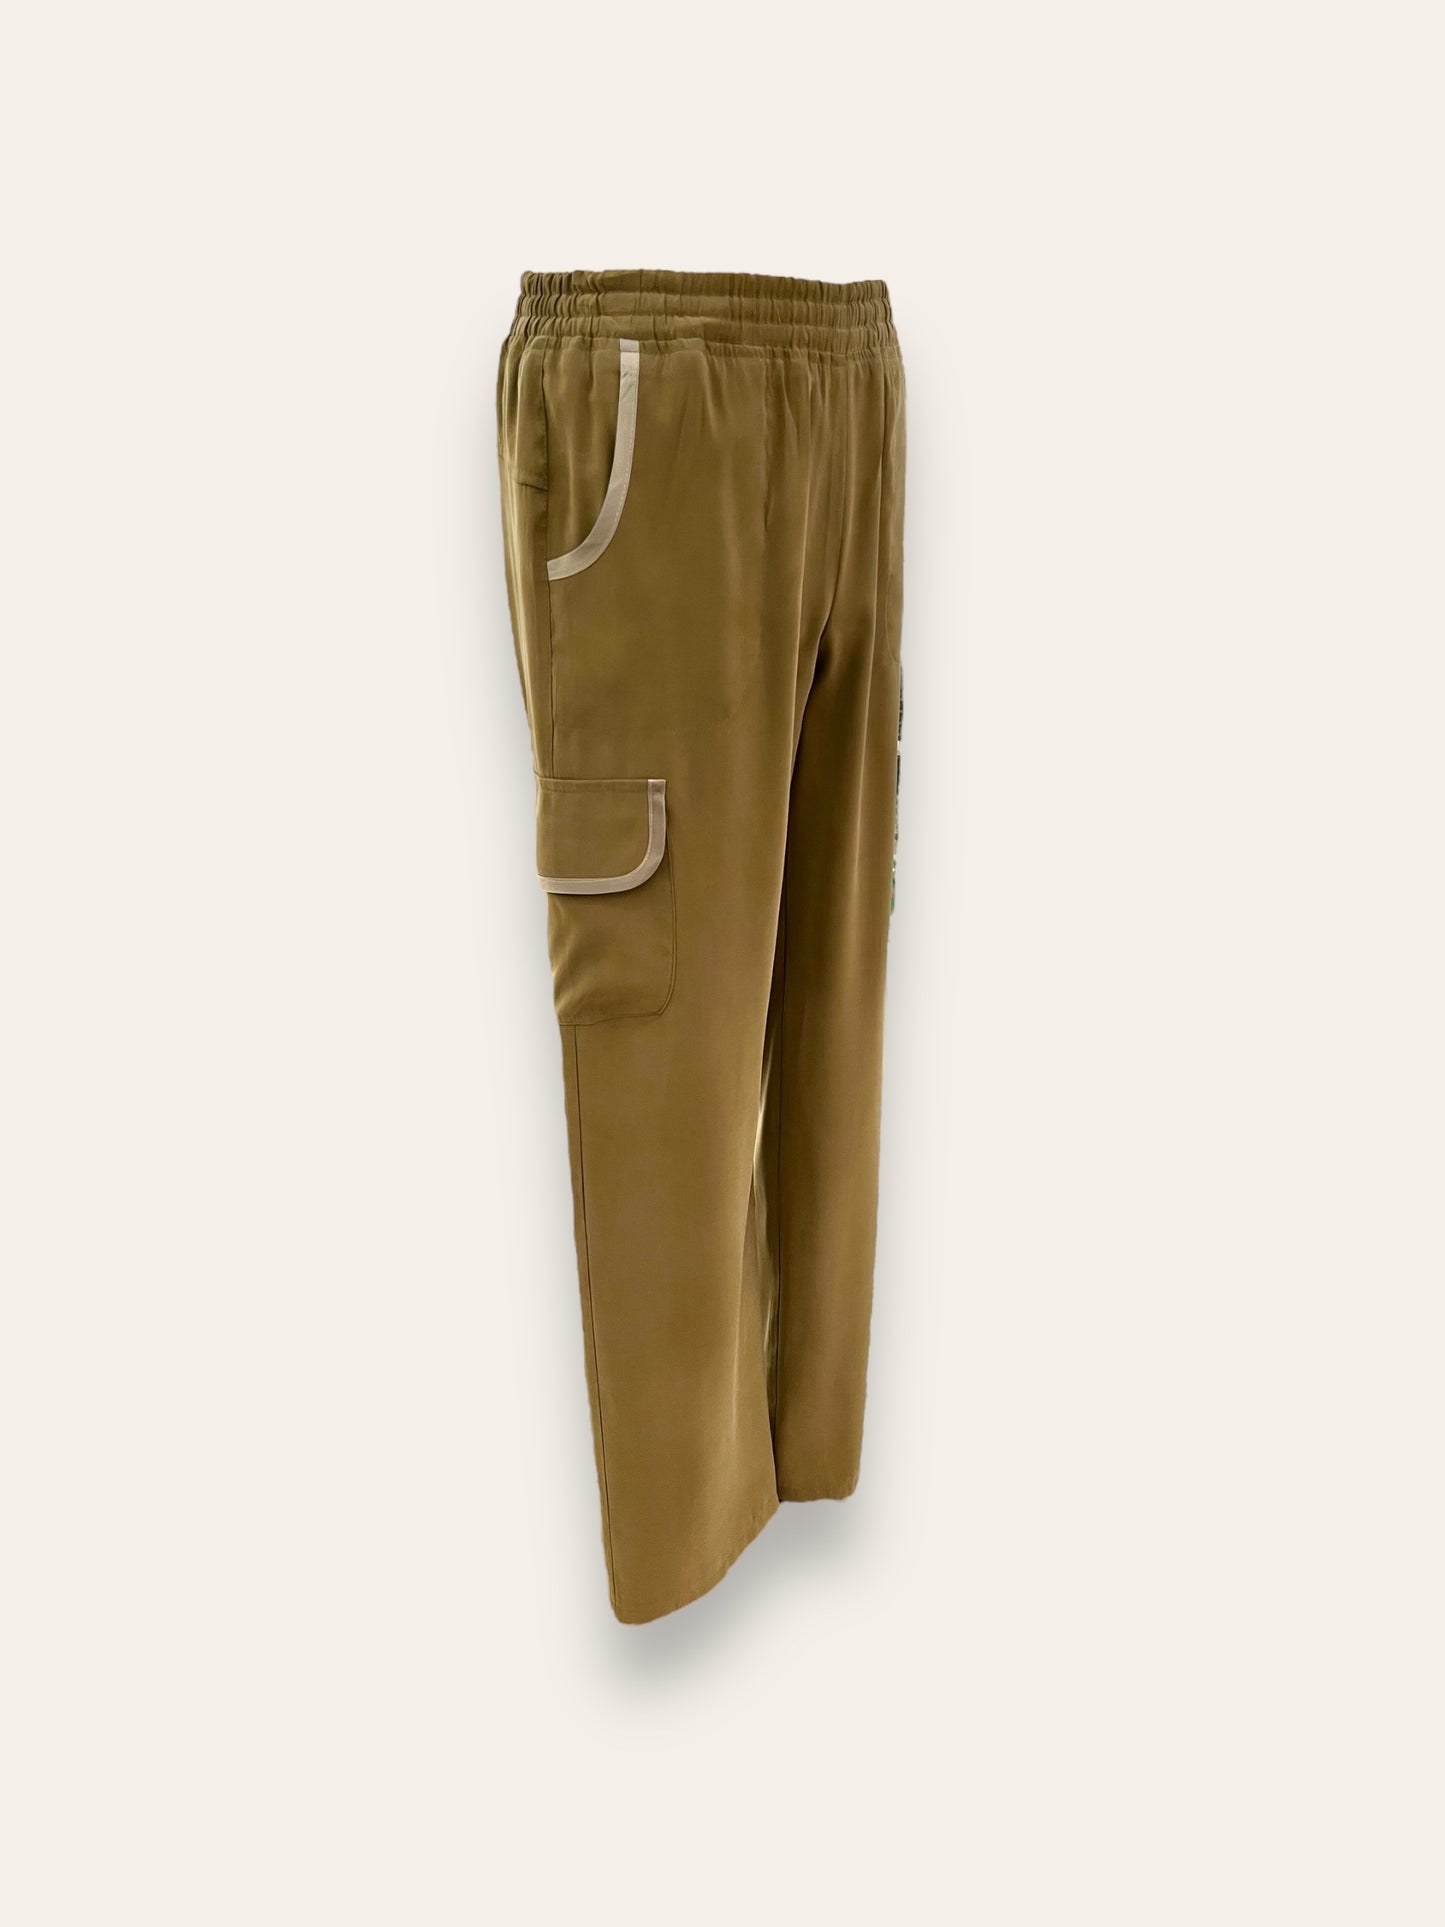 Pantalone Cargo Verde Militare Bordature In Raso